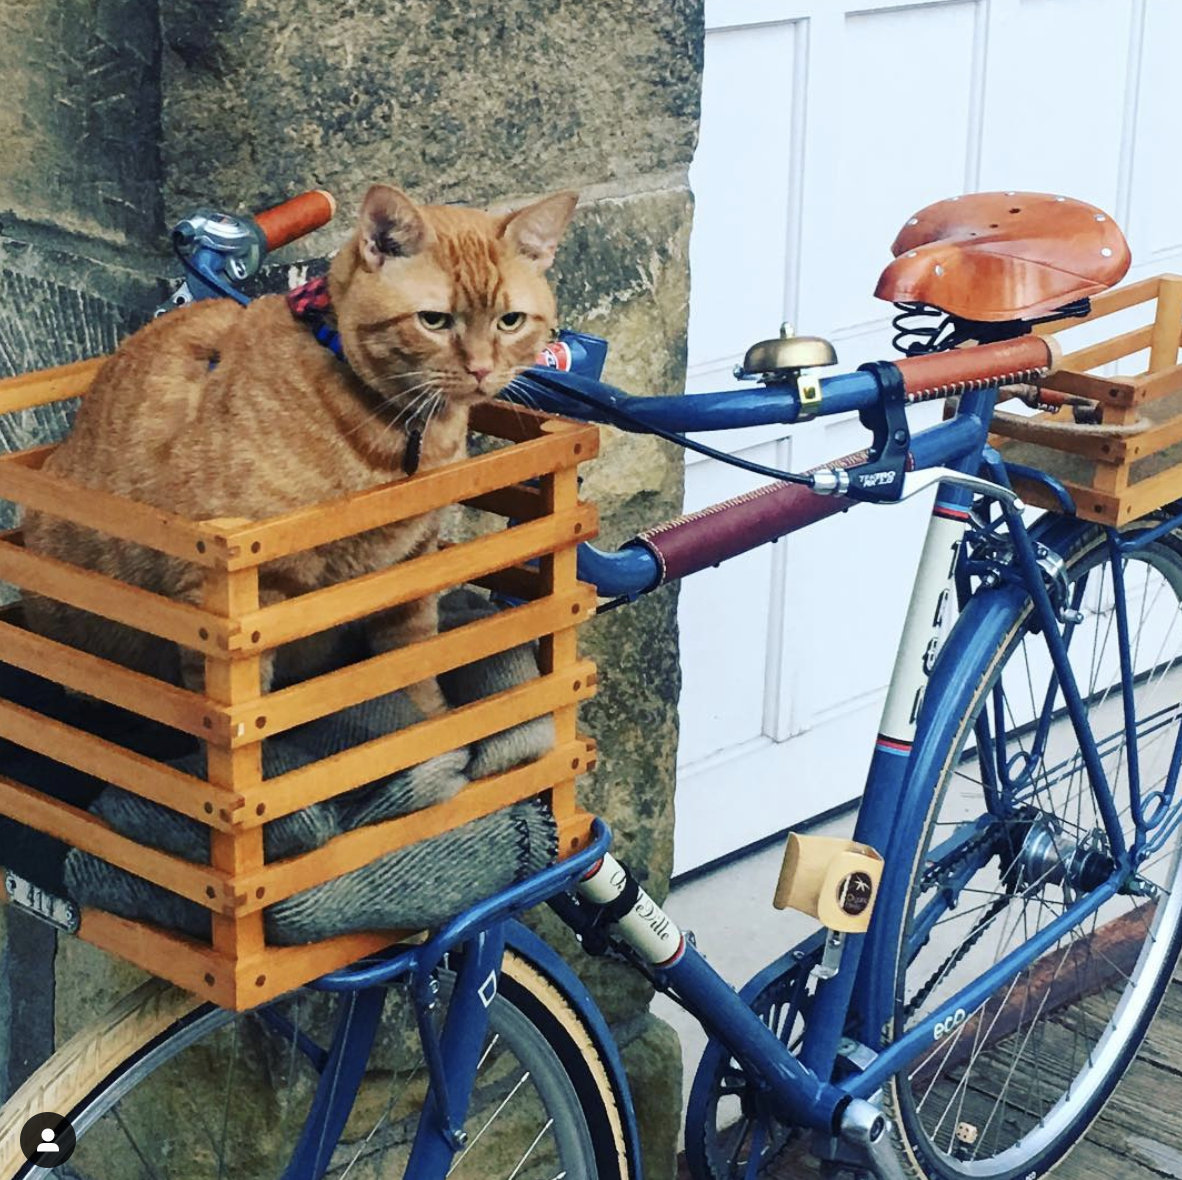 Customer Profile: Meet Mr. Pig Cat, the Stylish Bicycling Cat